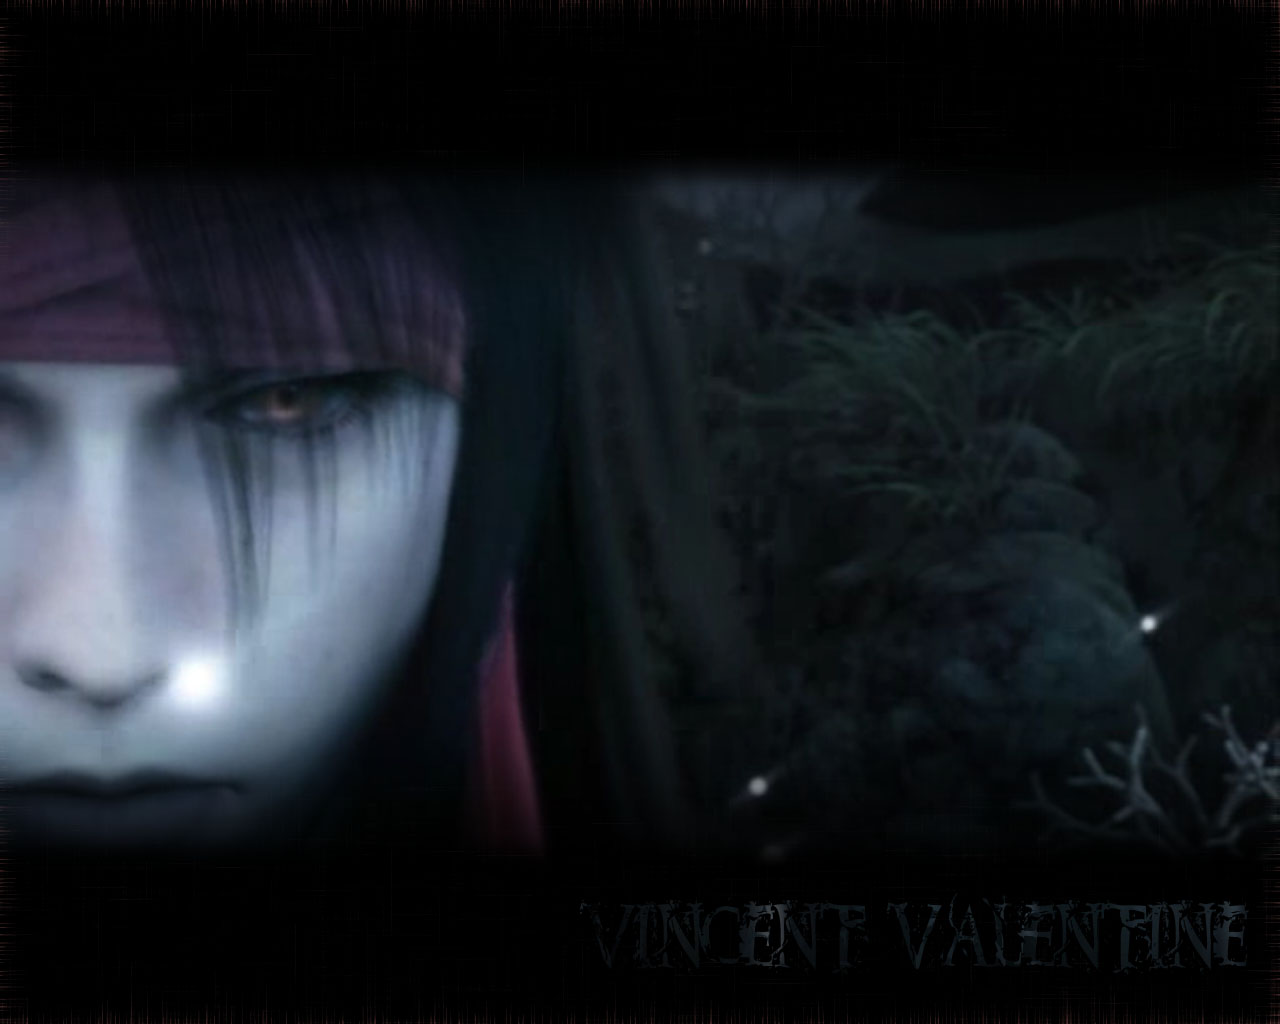 Vincent Valentine By Aspect11